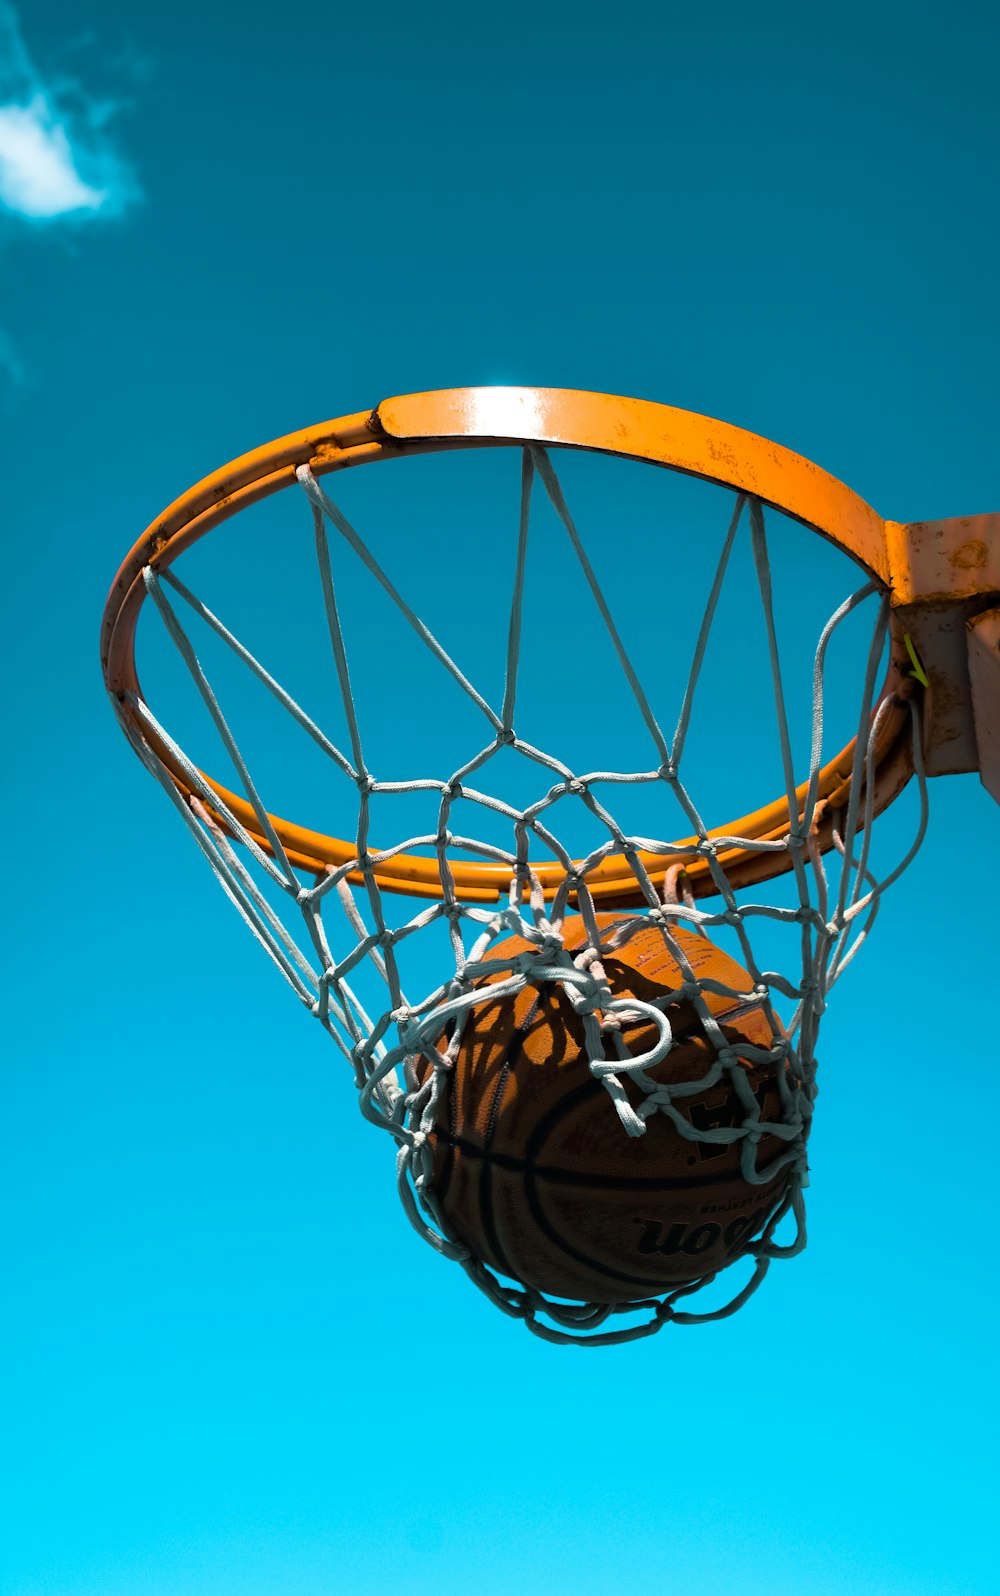 baloncesto en aro con red